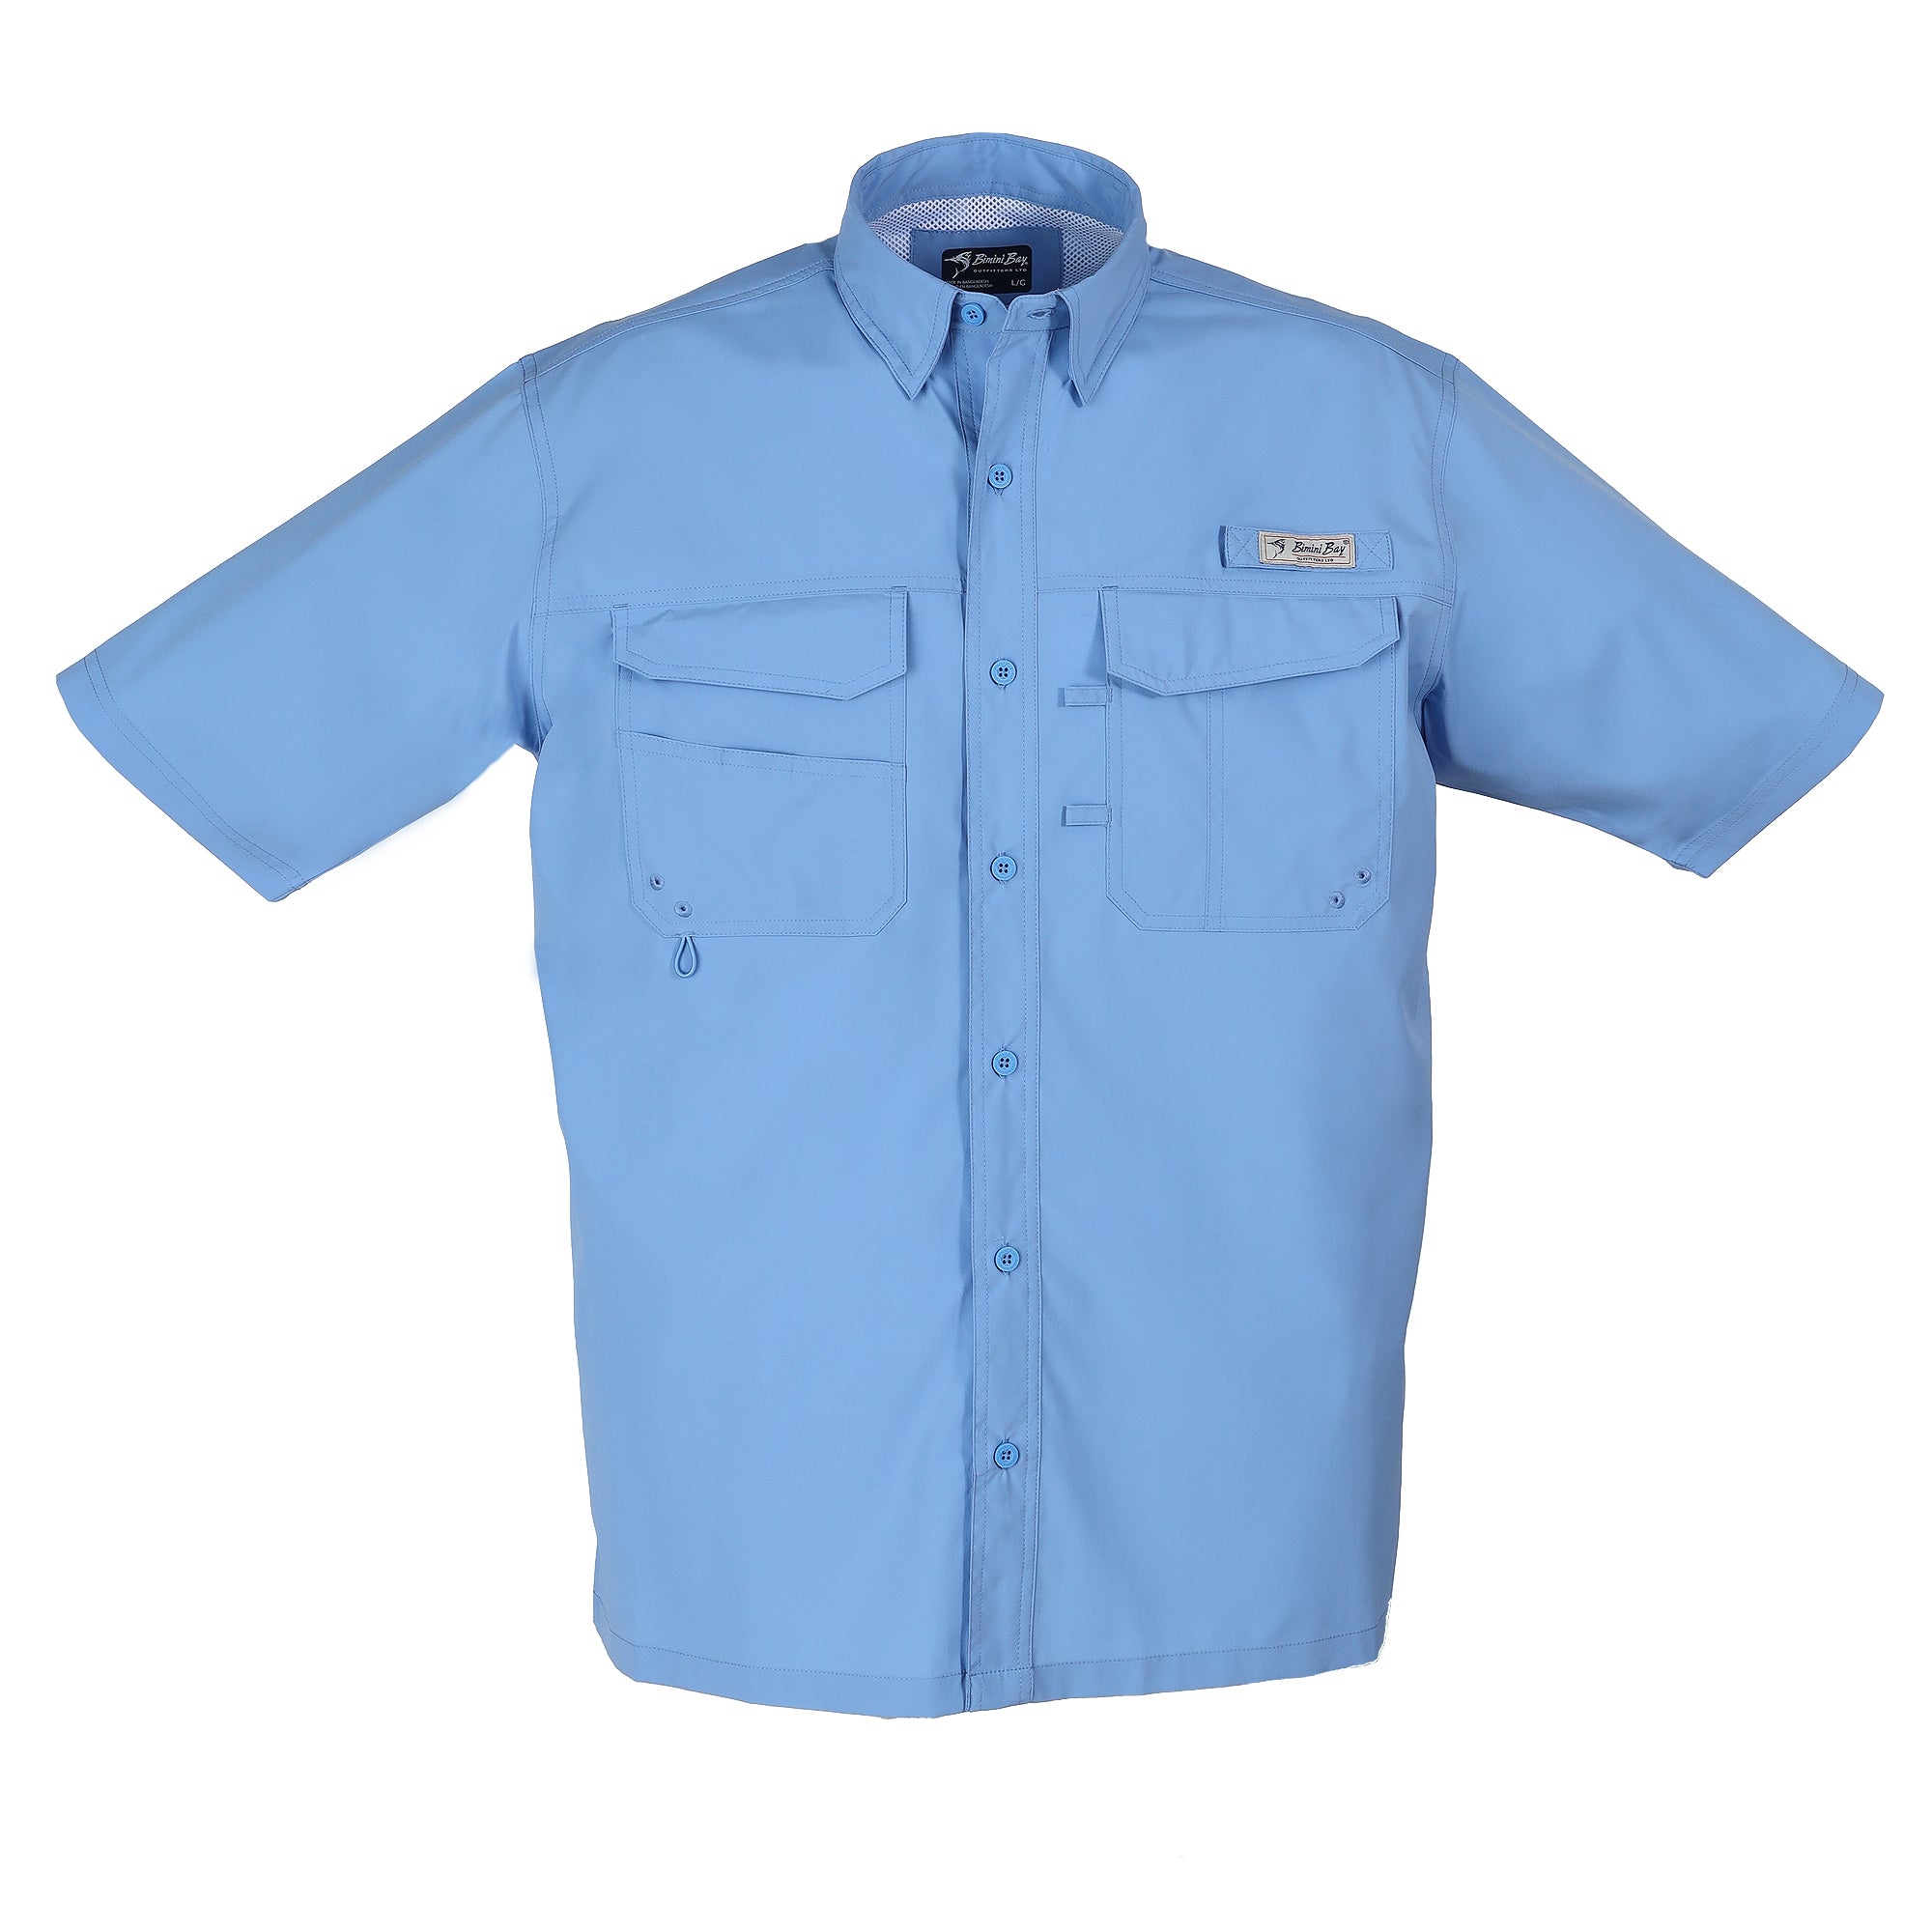 Bimini Bay Outfitters Key West Men's Short Sleeve Shirt Featuring BloodGuard  Plus